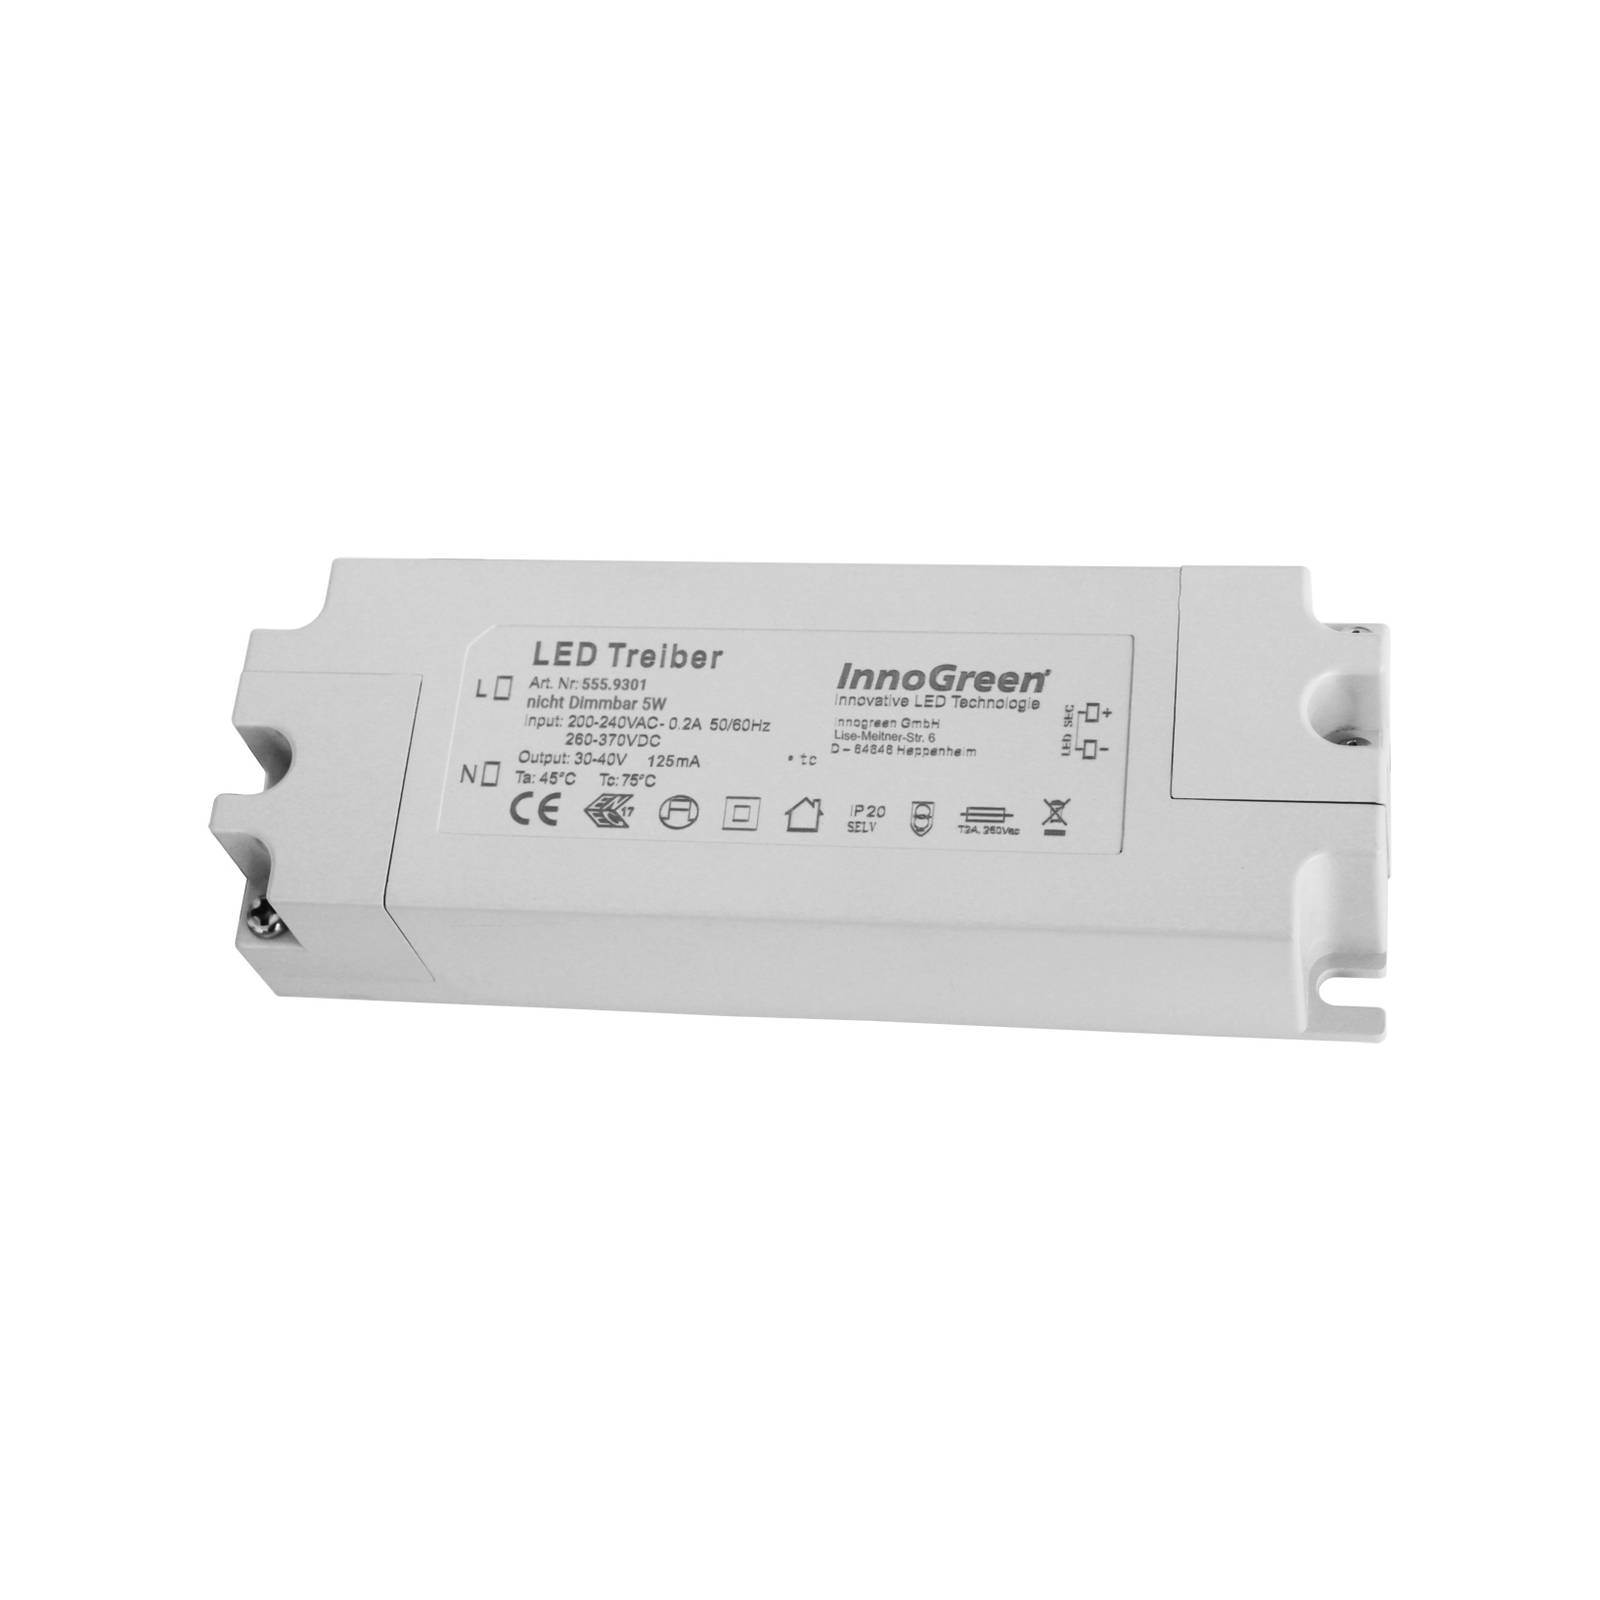 InnoGreen LED driver 220-240 V (AC/DC) 5W